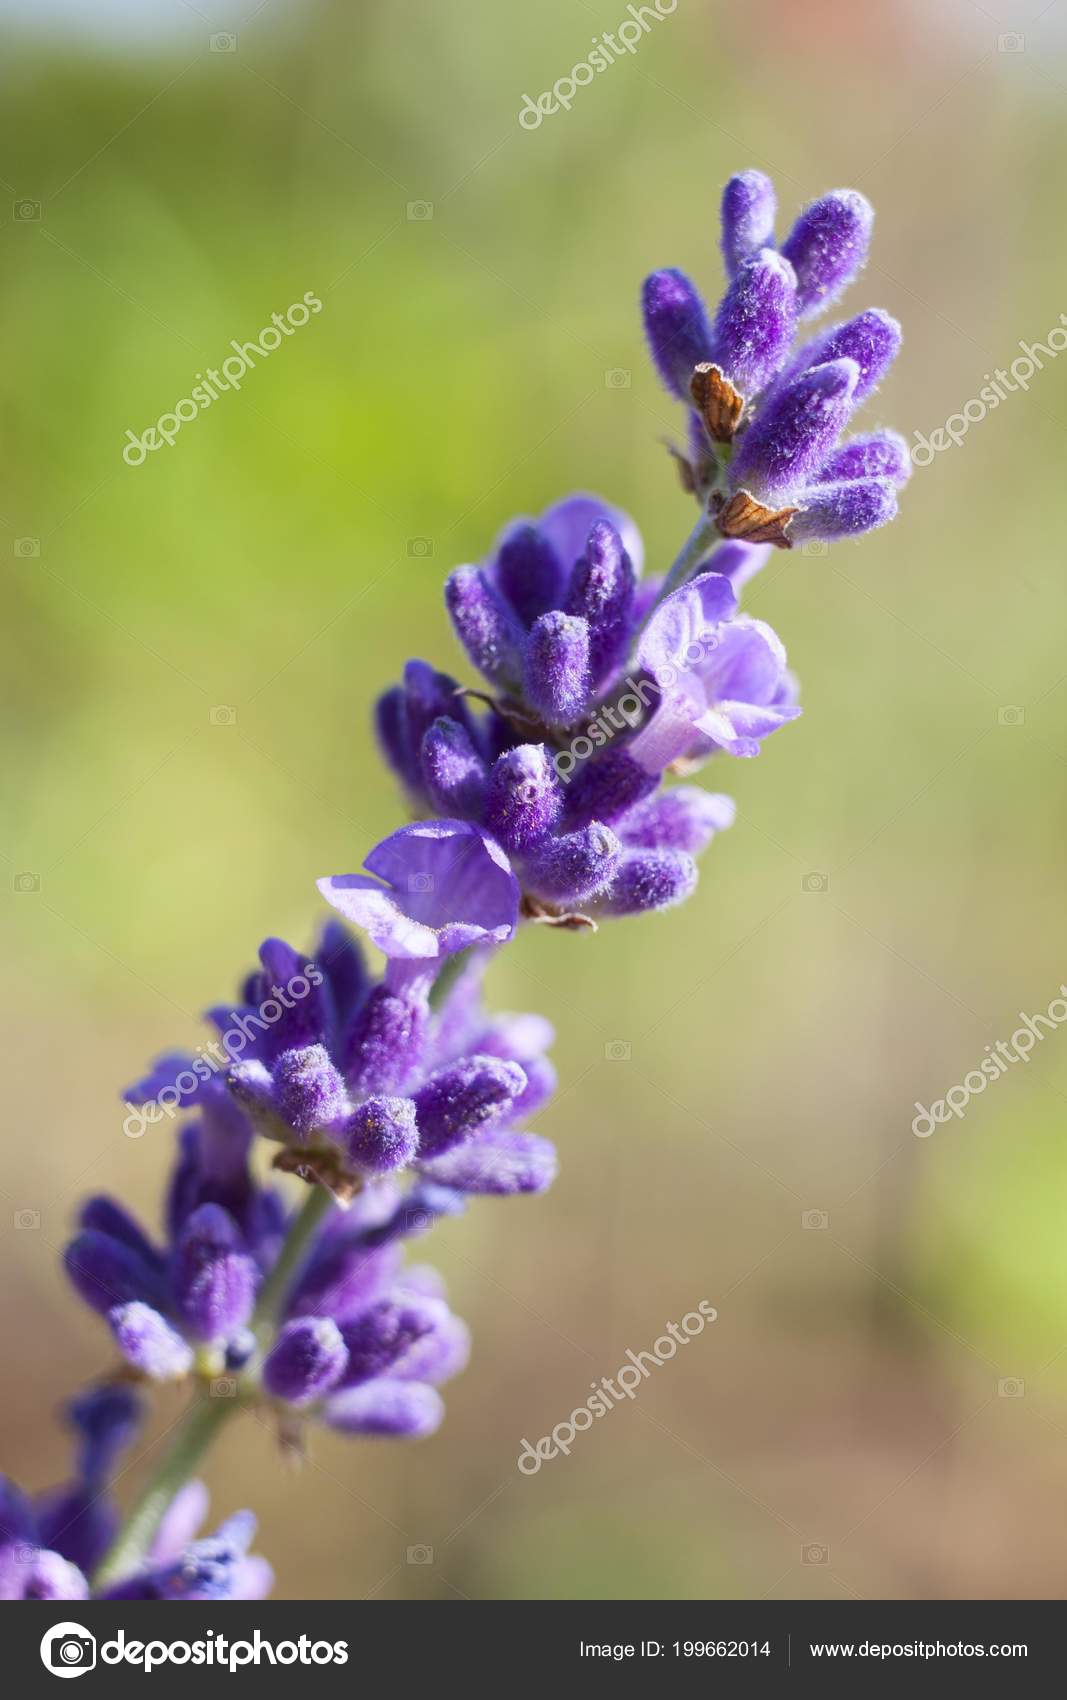 Verdaderas Flores Lavanda Lavandula Angustifolia Flores Púrpuras:  fotografía de stock © imagebrokermicrostock #199662014 | Depositphotos